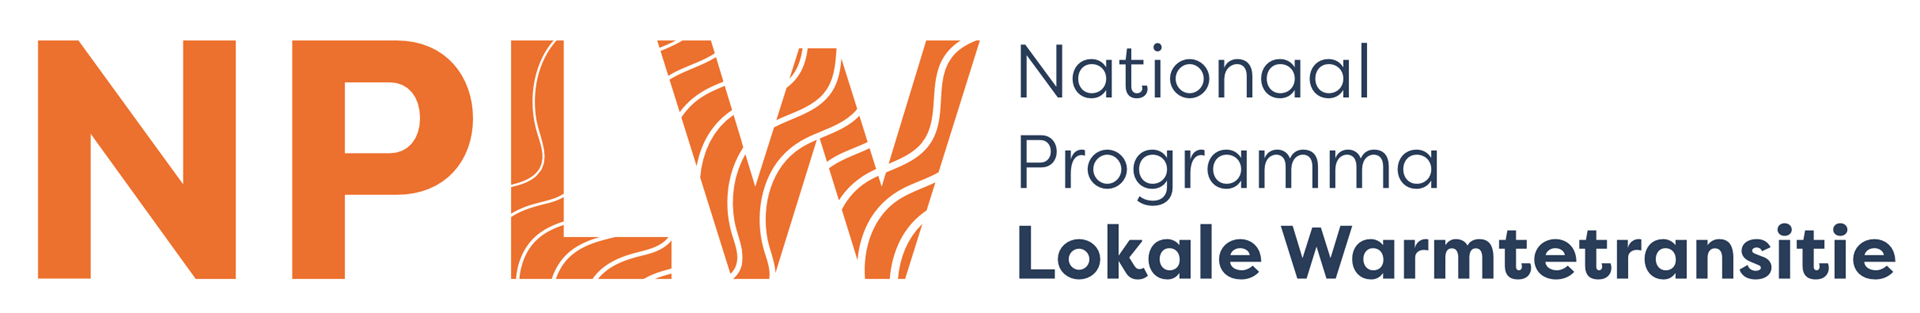 Nationaal Programma Lokale Warmtetransitie logo